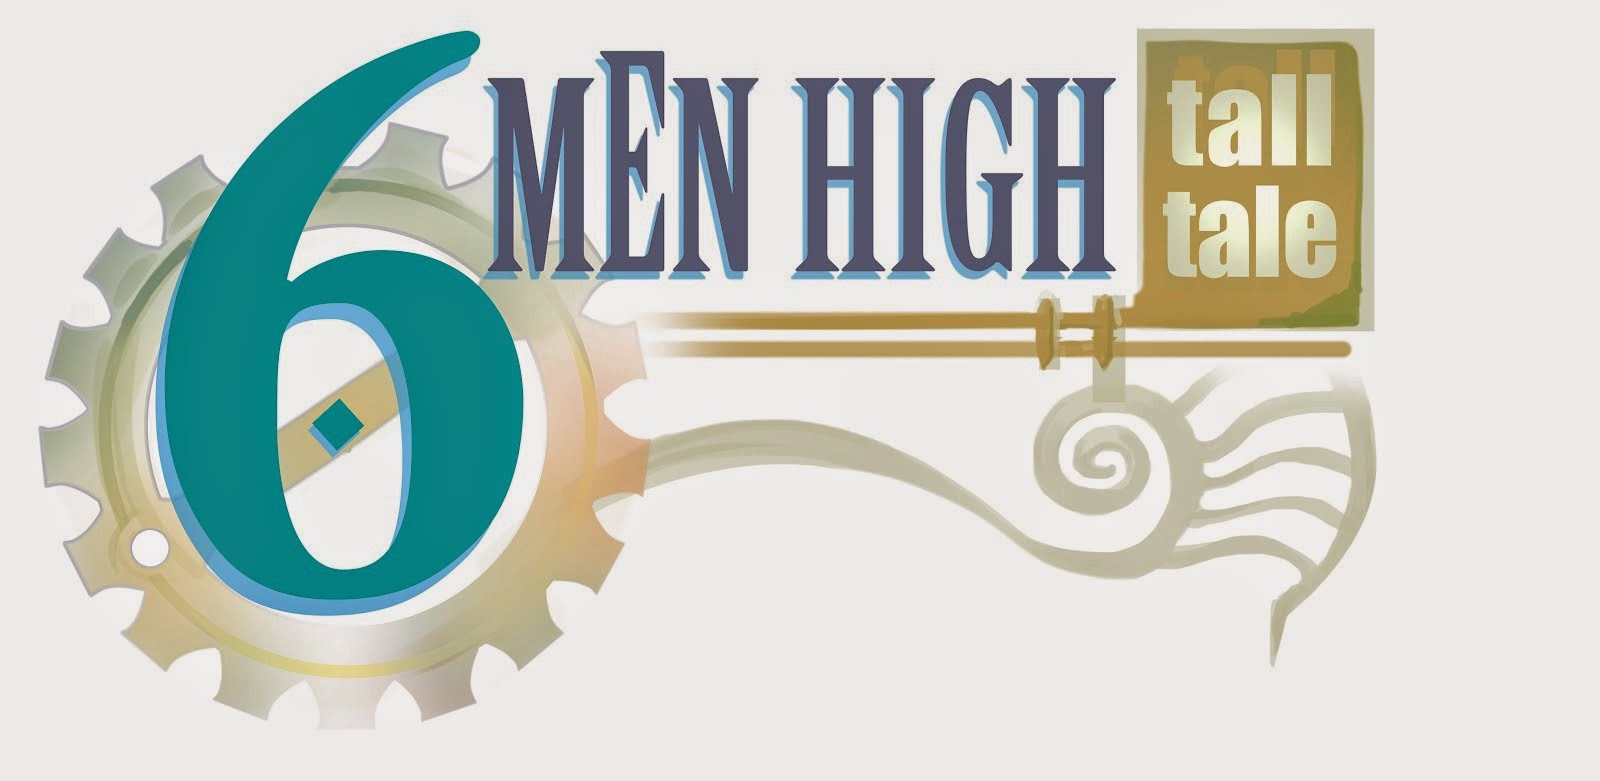 6 Men high tall tale